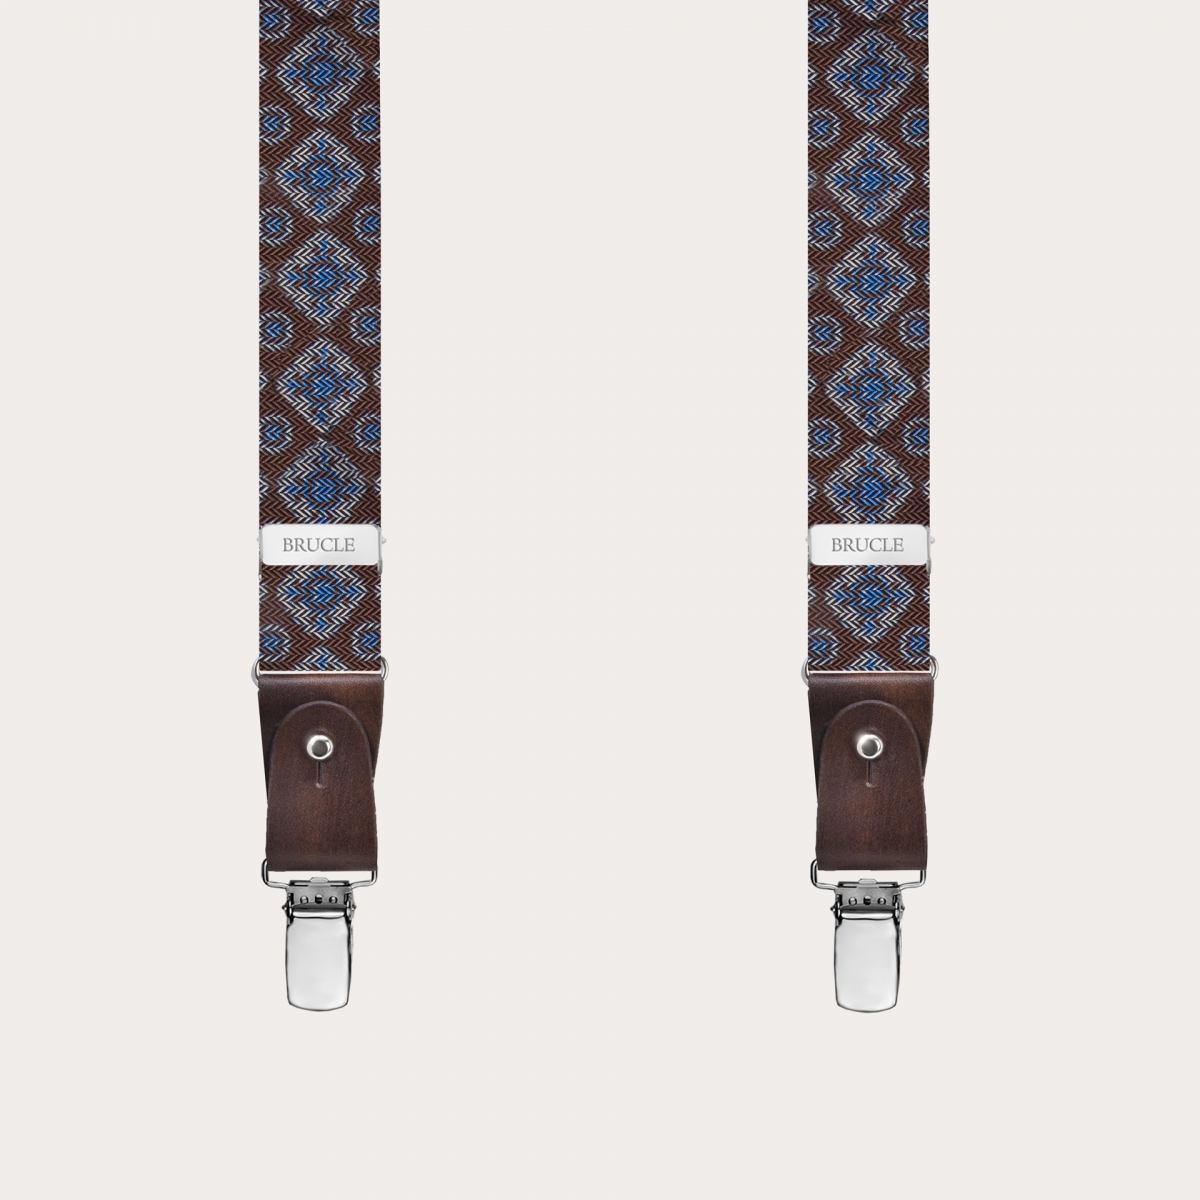 BRUCLE Narrow brown silk suspenders with a geometric pattern, nickel free